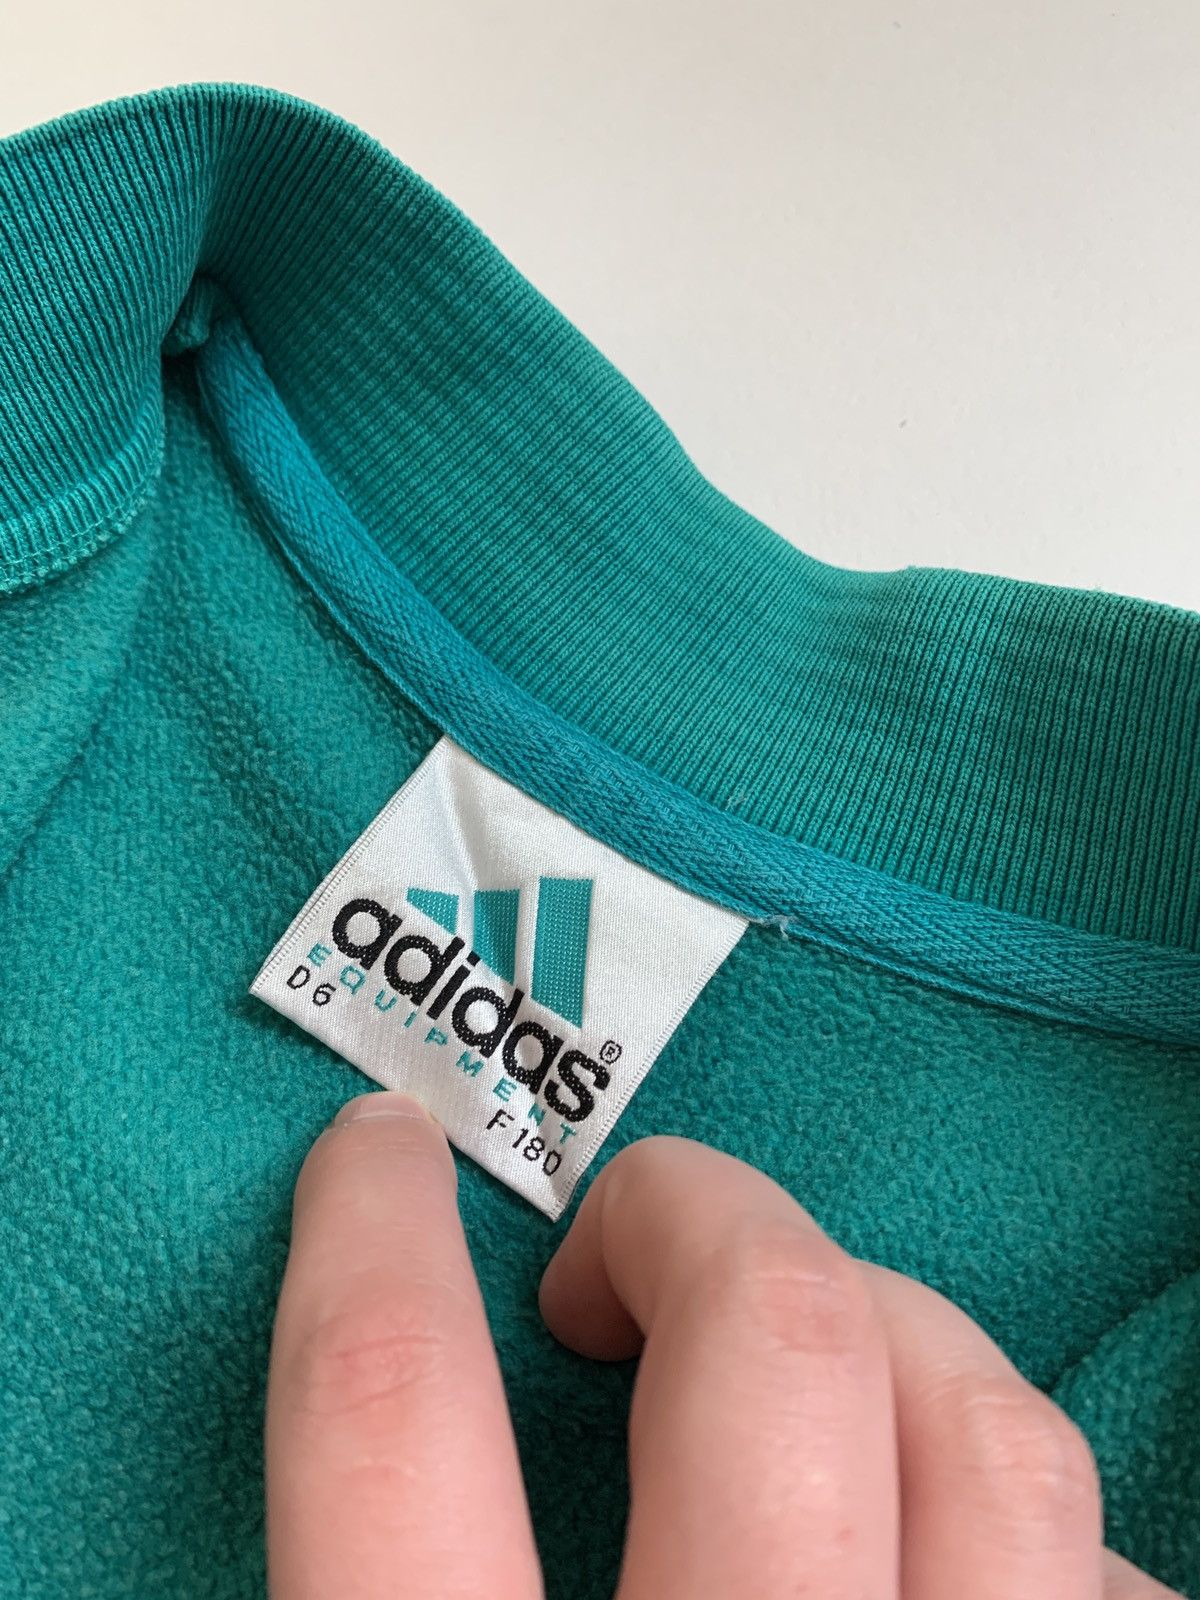 Adidas 90s Adidas Equipment Rare Vintage 1/3 Zip Sweatshirt Anorak Size US M / EU 48-50 / 2 - 8 Thumbnail